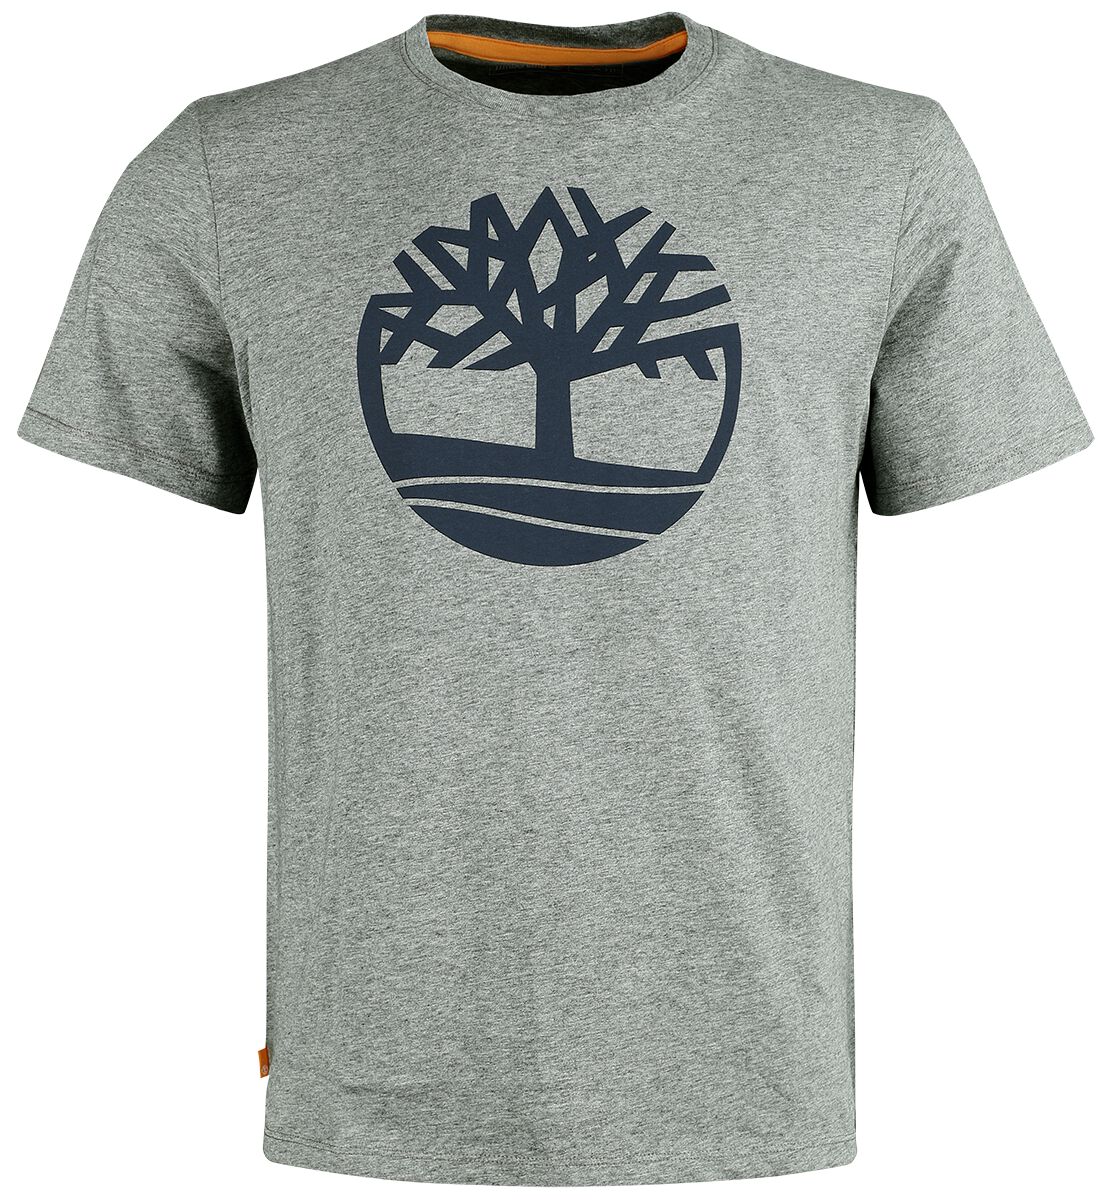 Timberland T-Shirt - Kennebec River Tree Logo Short Sleeve Tee - S bis L - für Männer - Größe M - grau meliert